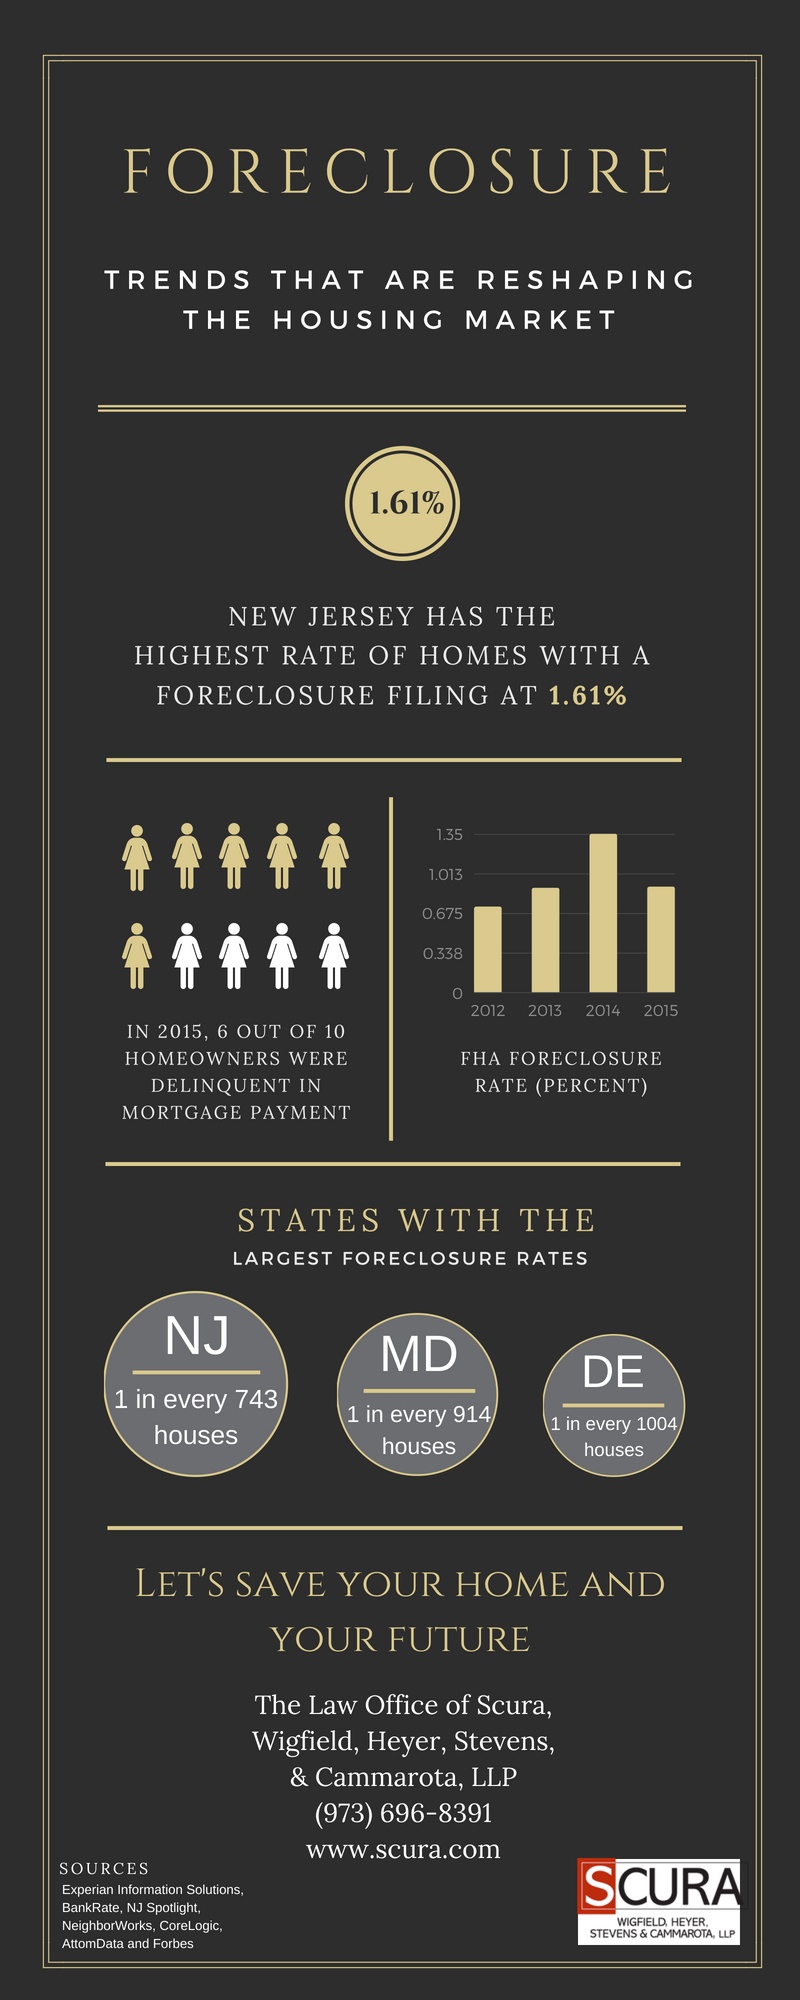 Foreclosure Infographic (2)